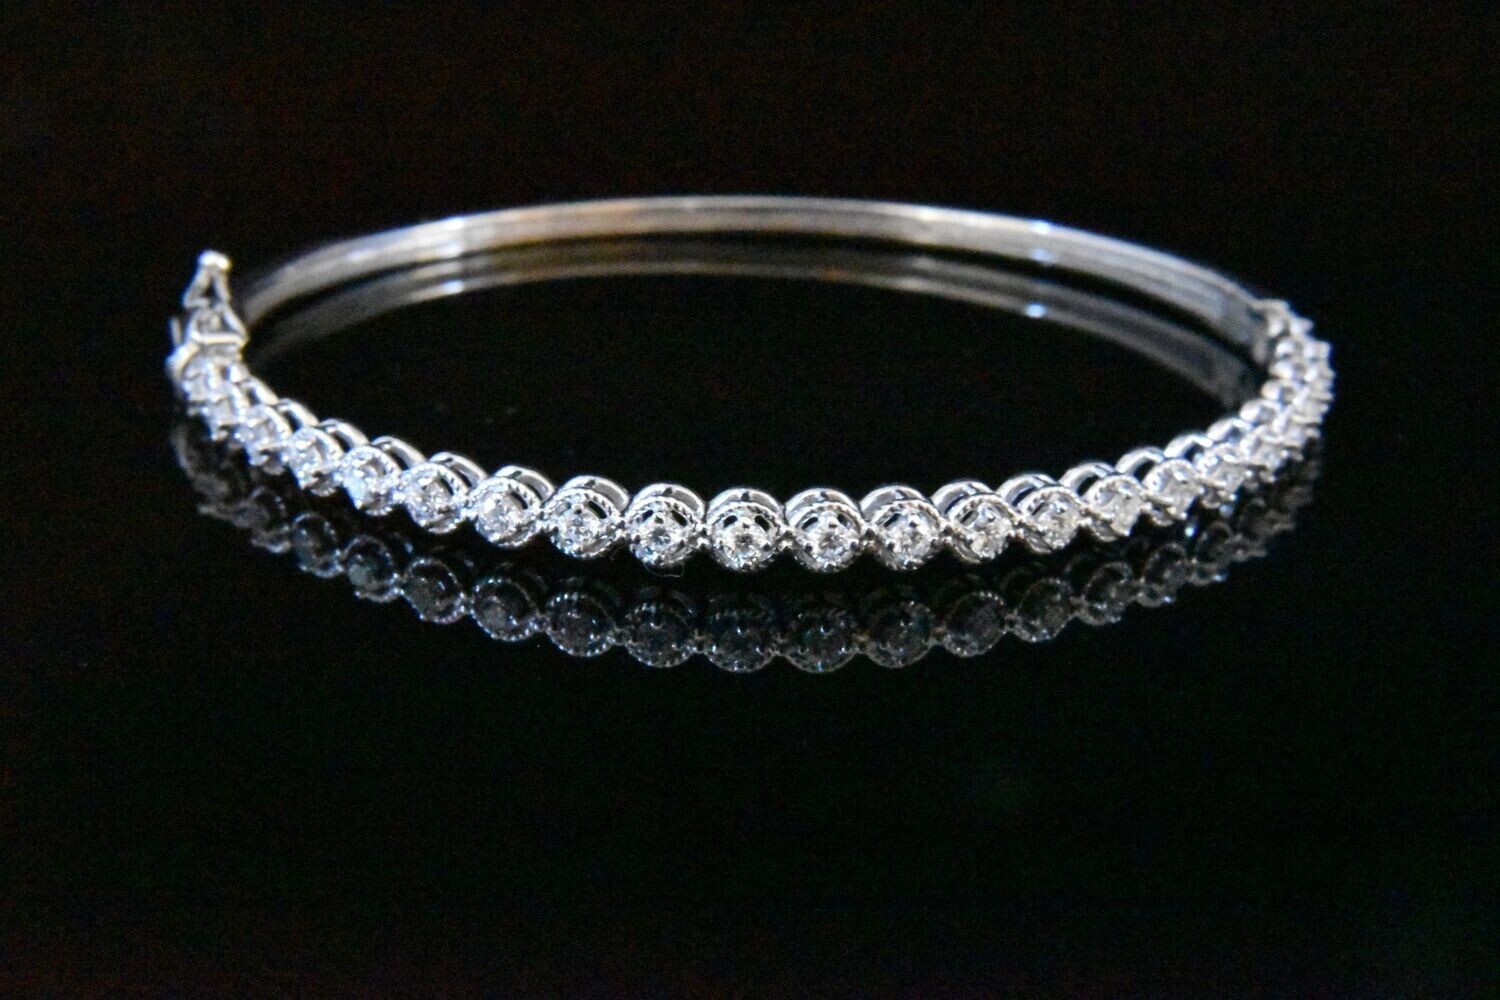 Diamond bangle bracelet in 14KWG – White Diamonds: 0.65ct